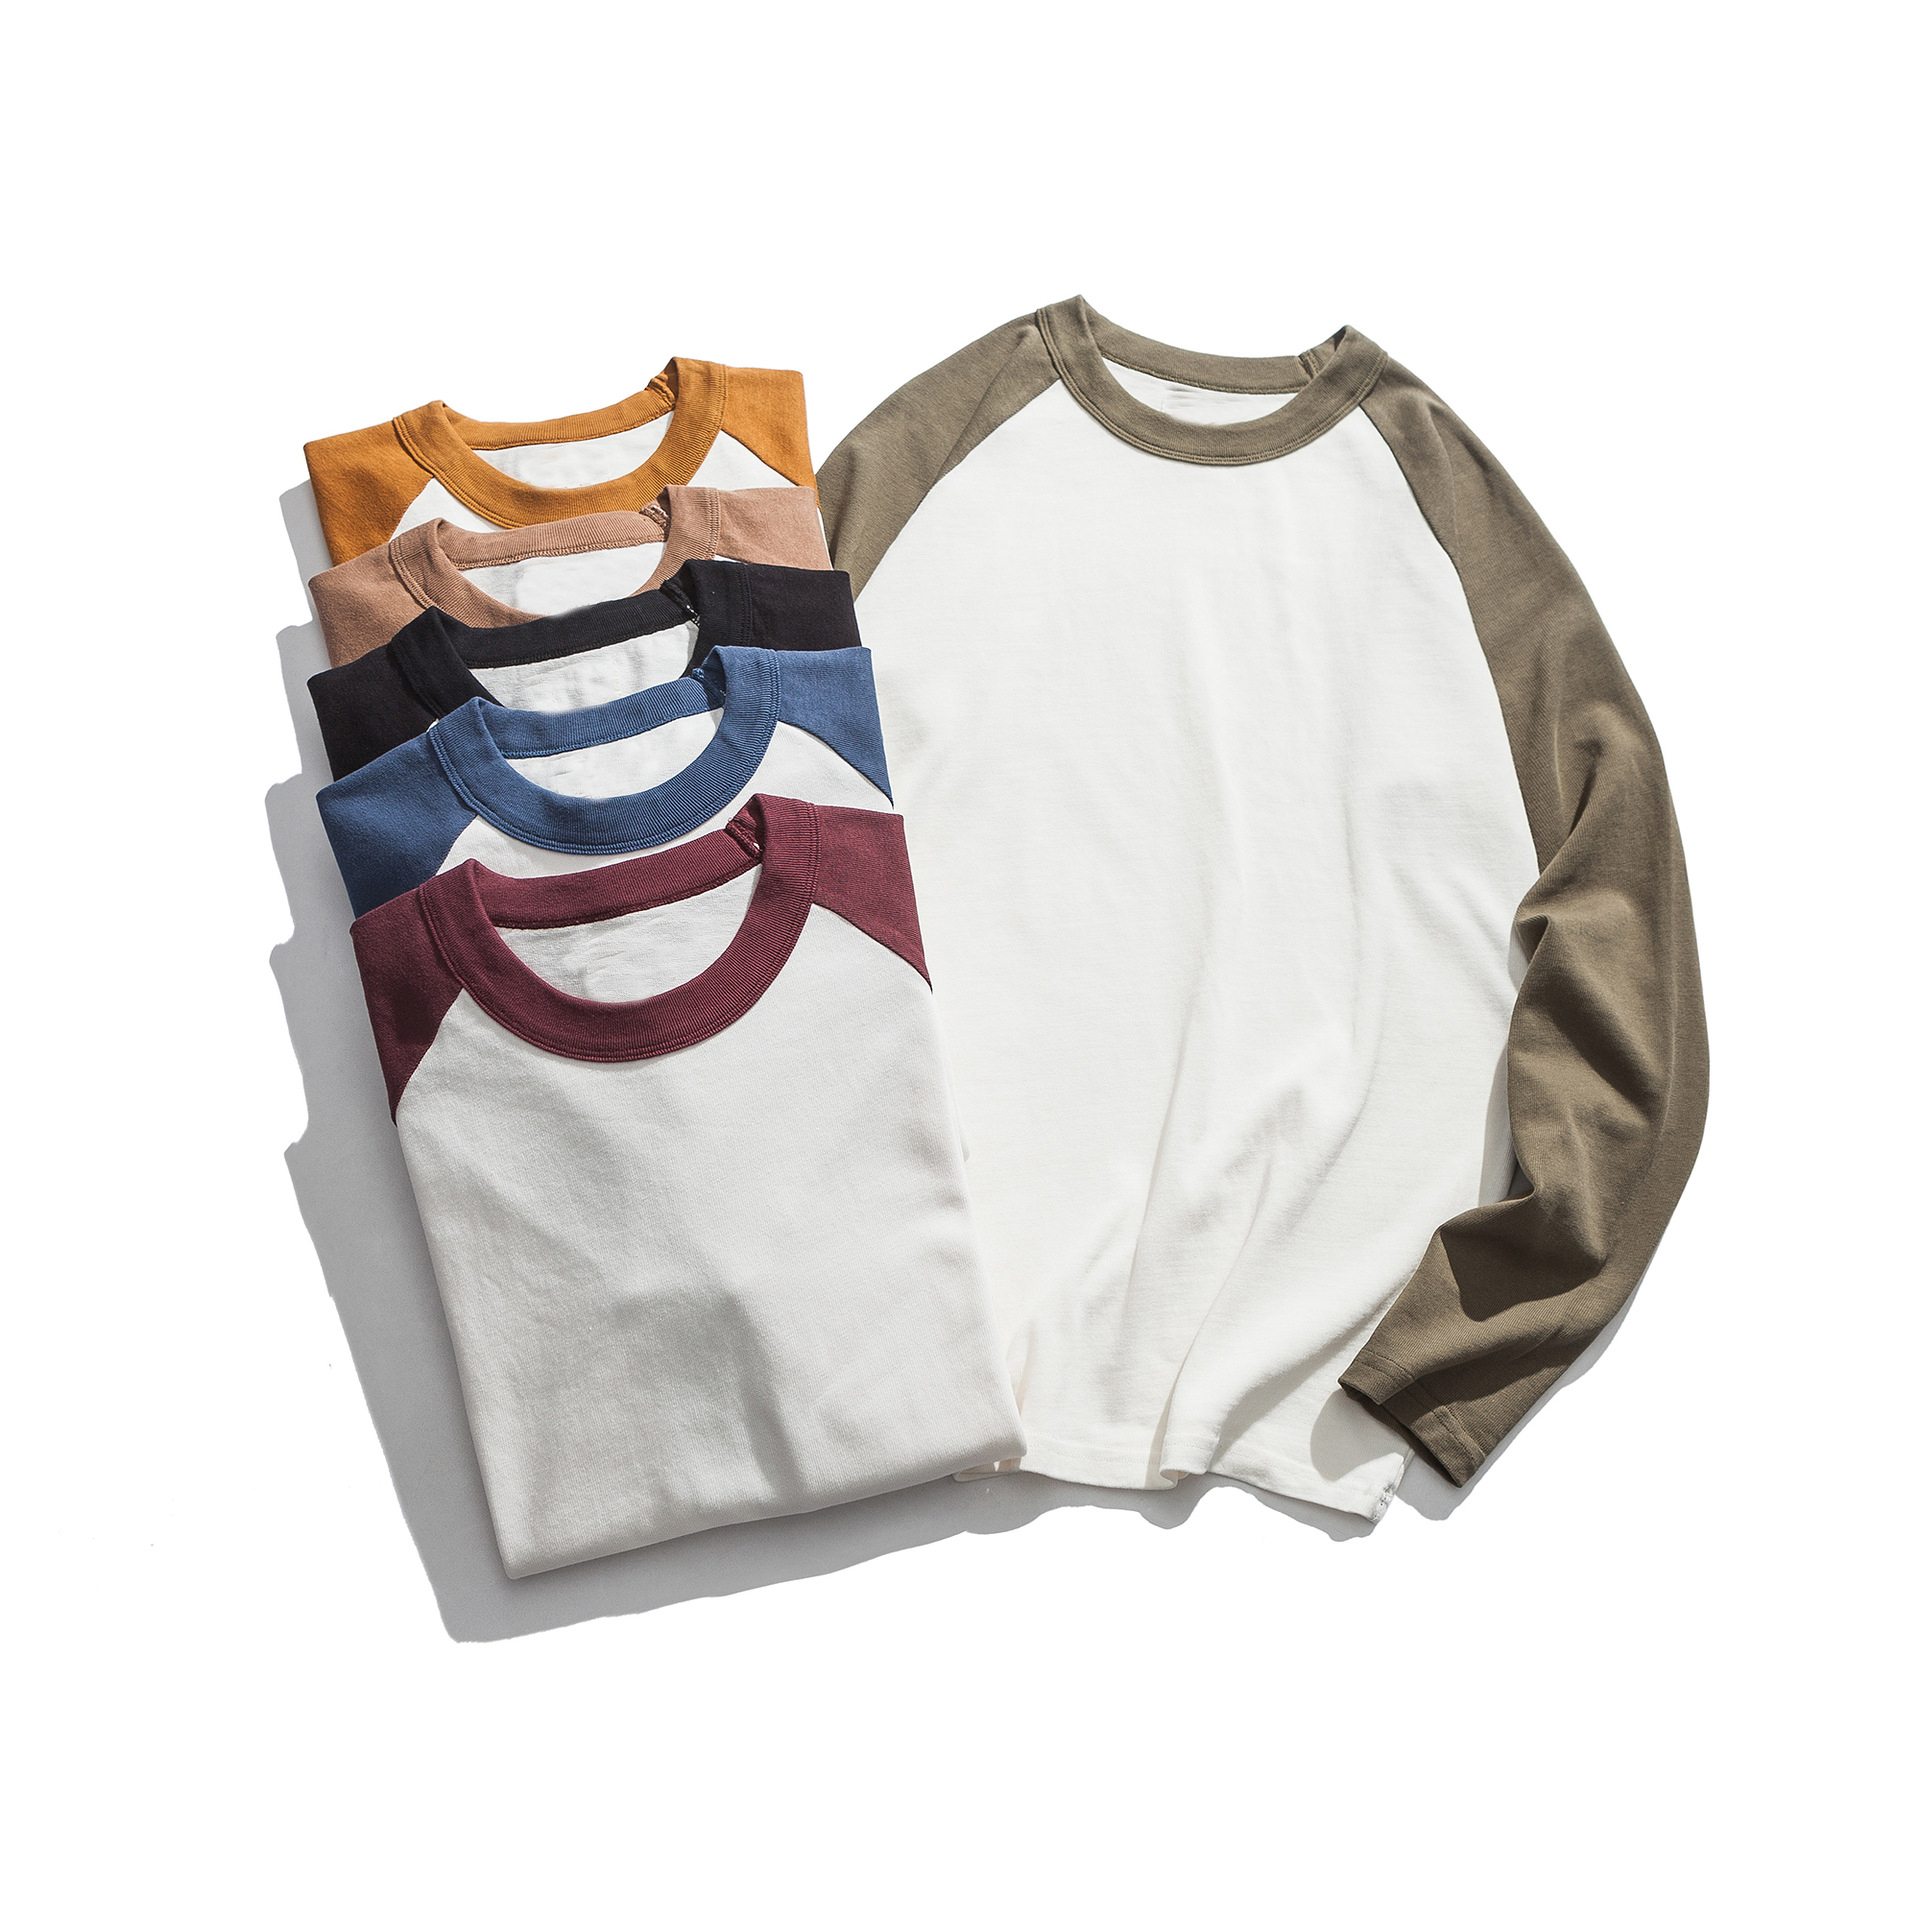 Popular Design for Best Custom Hoodies - 100% cotton plain long sleeve t-shirt or custom embroidery logo t-shirt – Gift